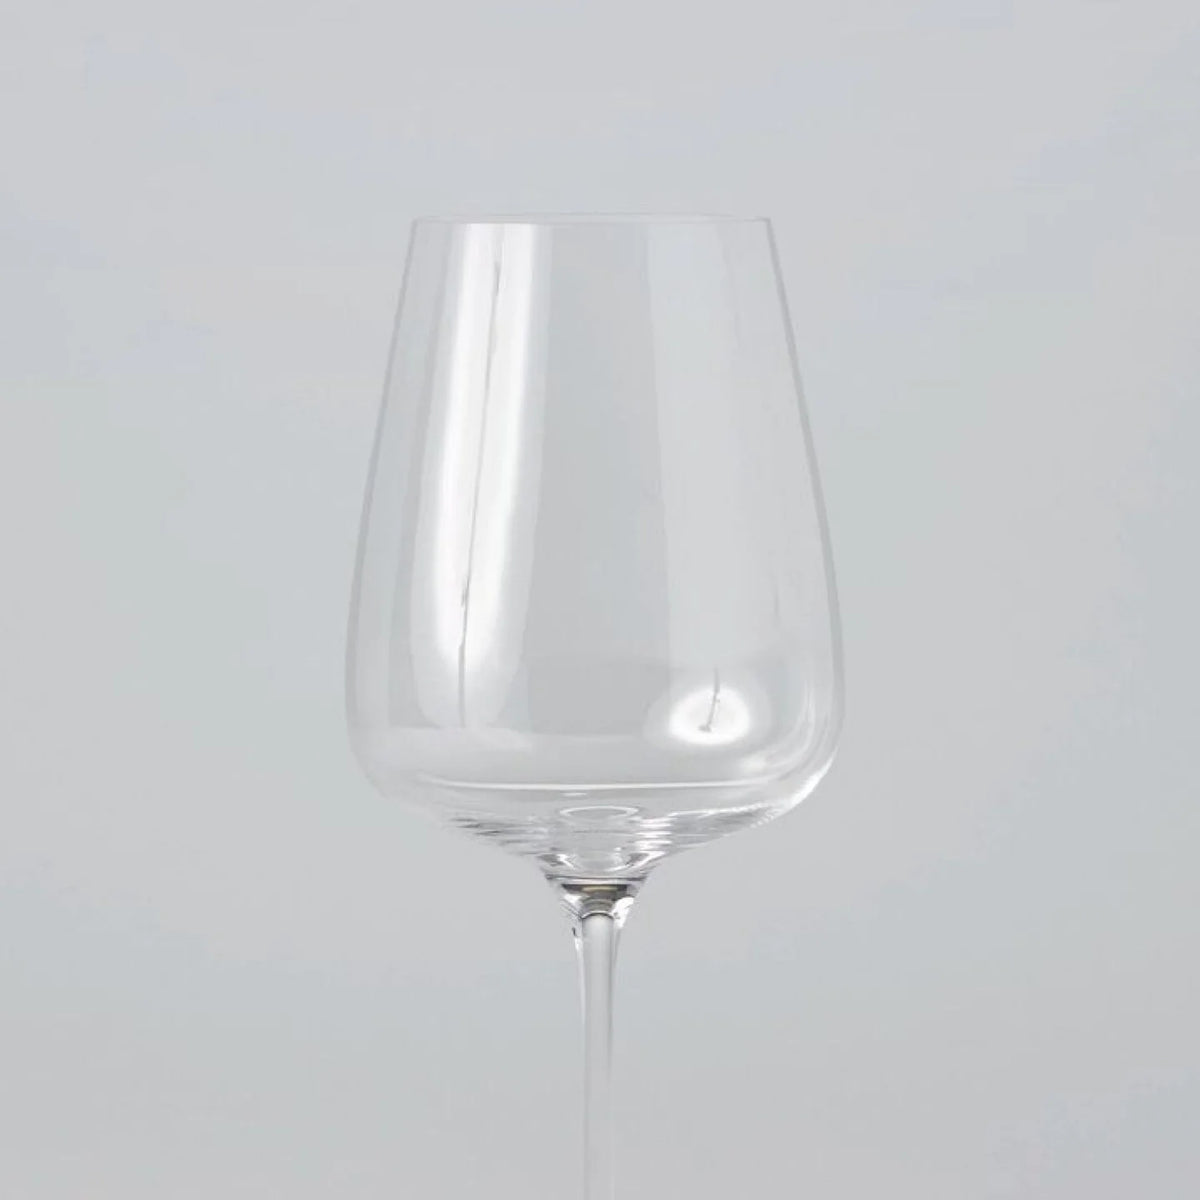 The Wine Glasses Set of 4